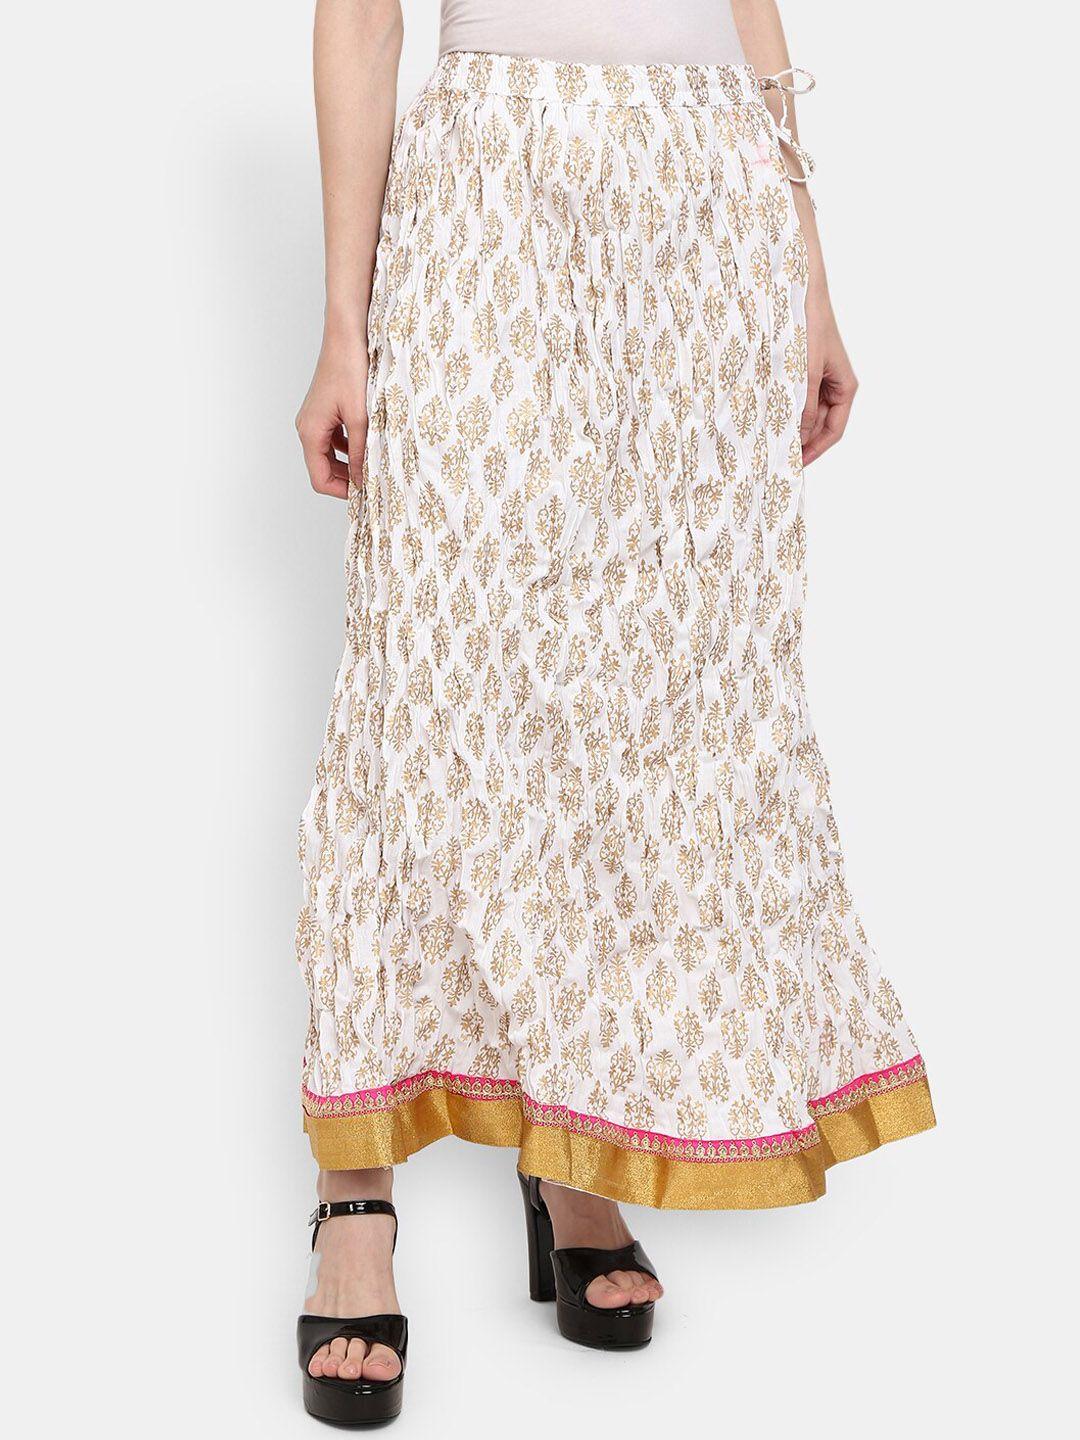 v-mart women white & gold toned ethnic floral motif printed skirt